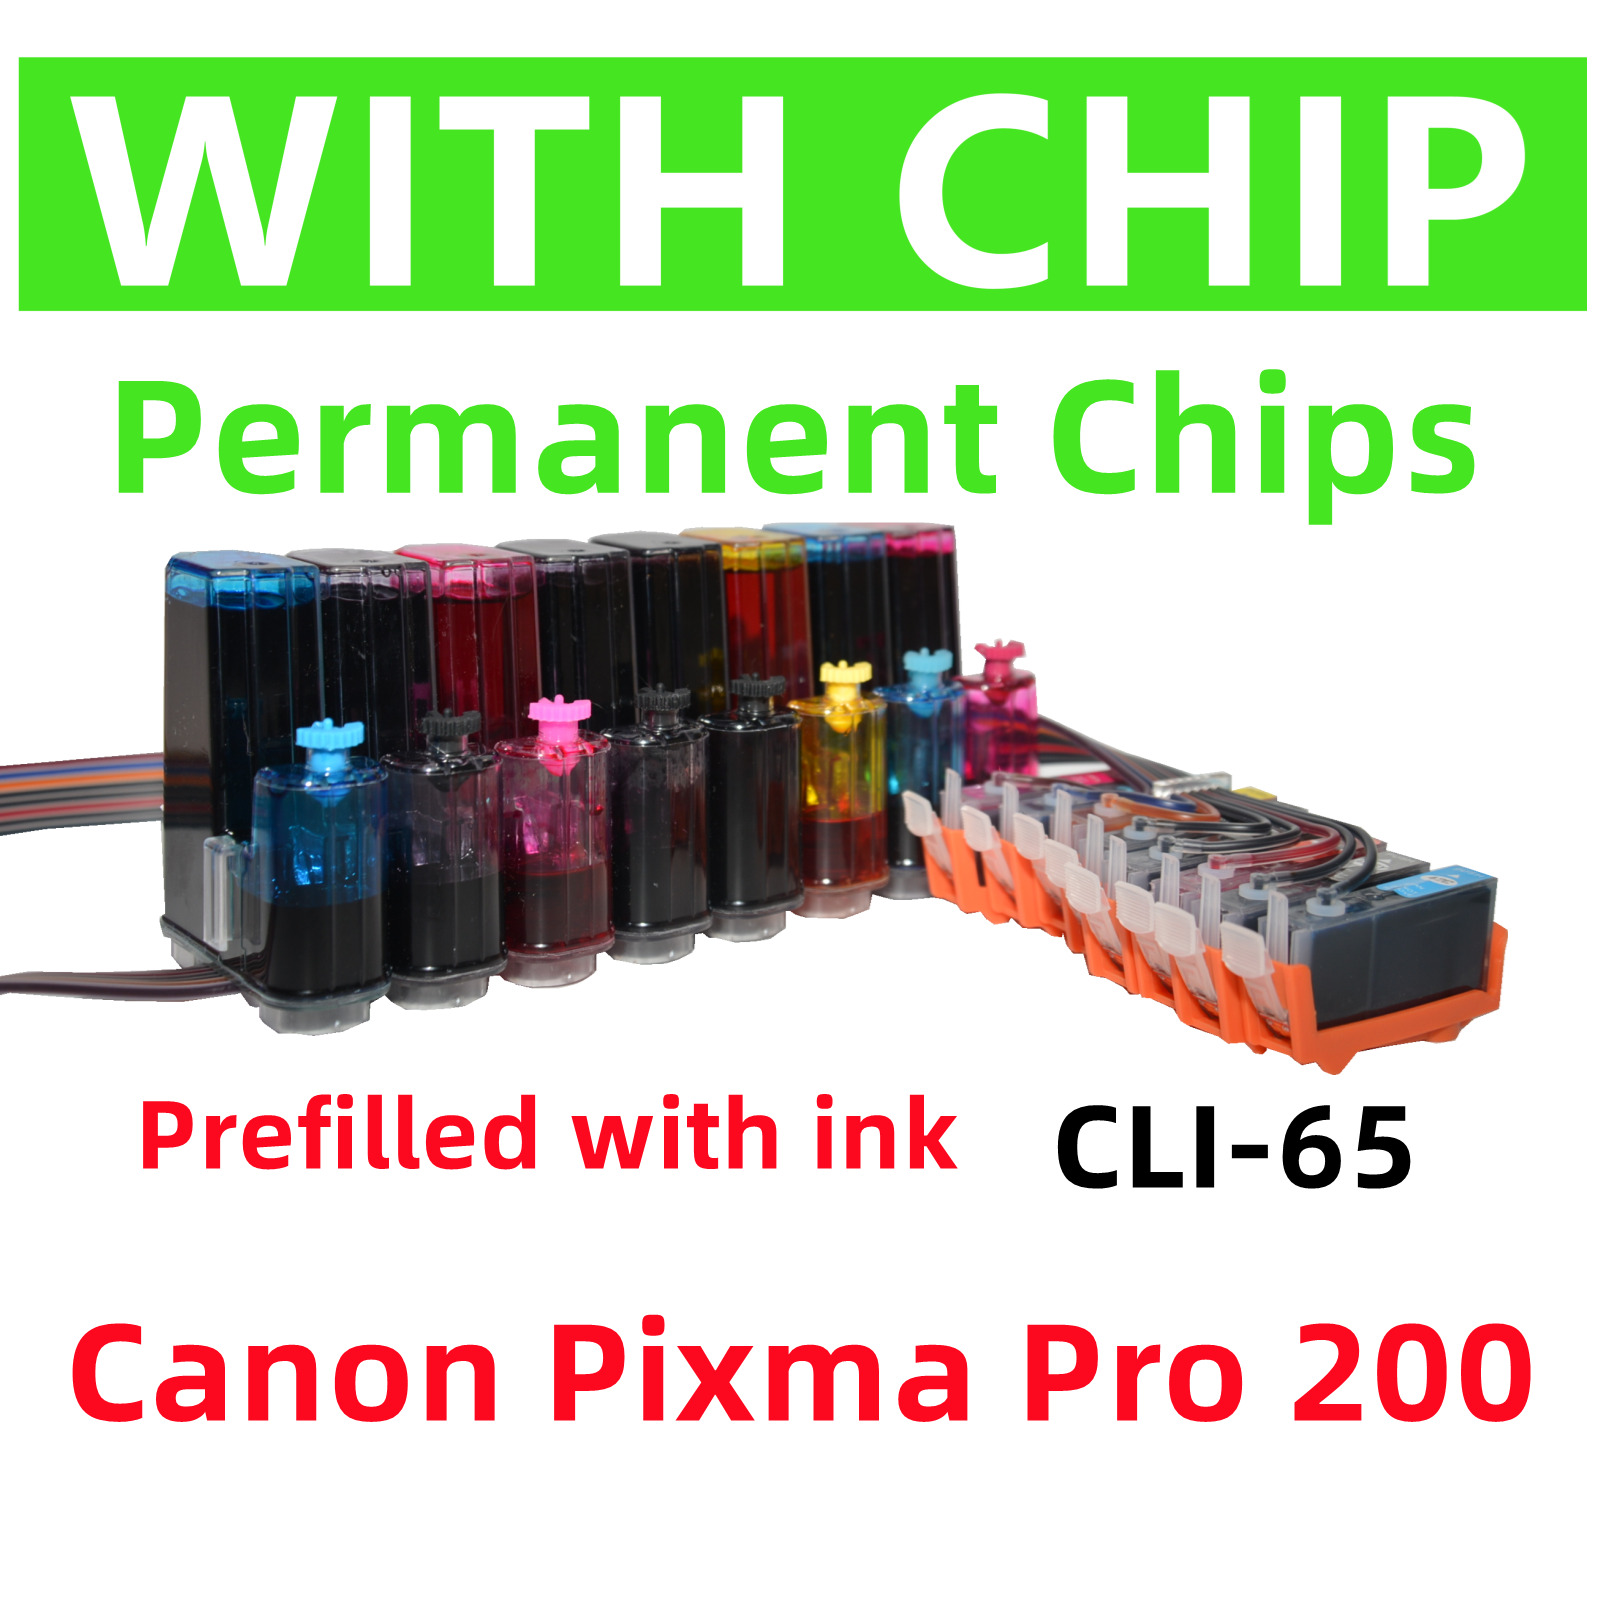 Refillable CIS CISS ink system for Canon Pixma Pro 200 Printer cli-65 cartridge